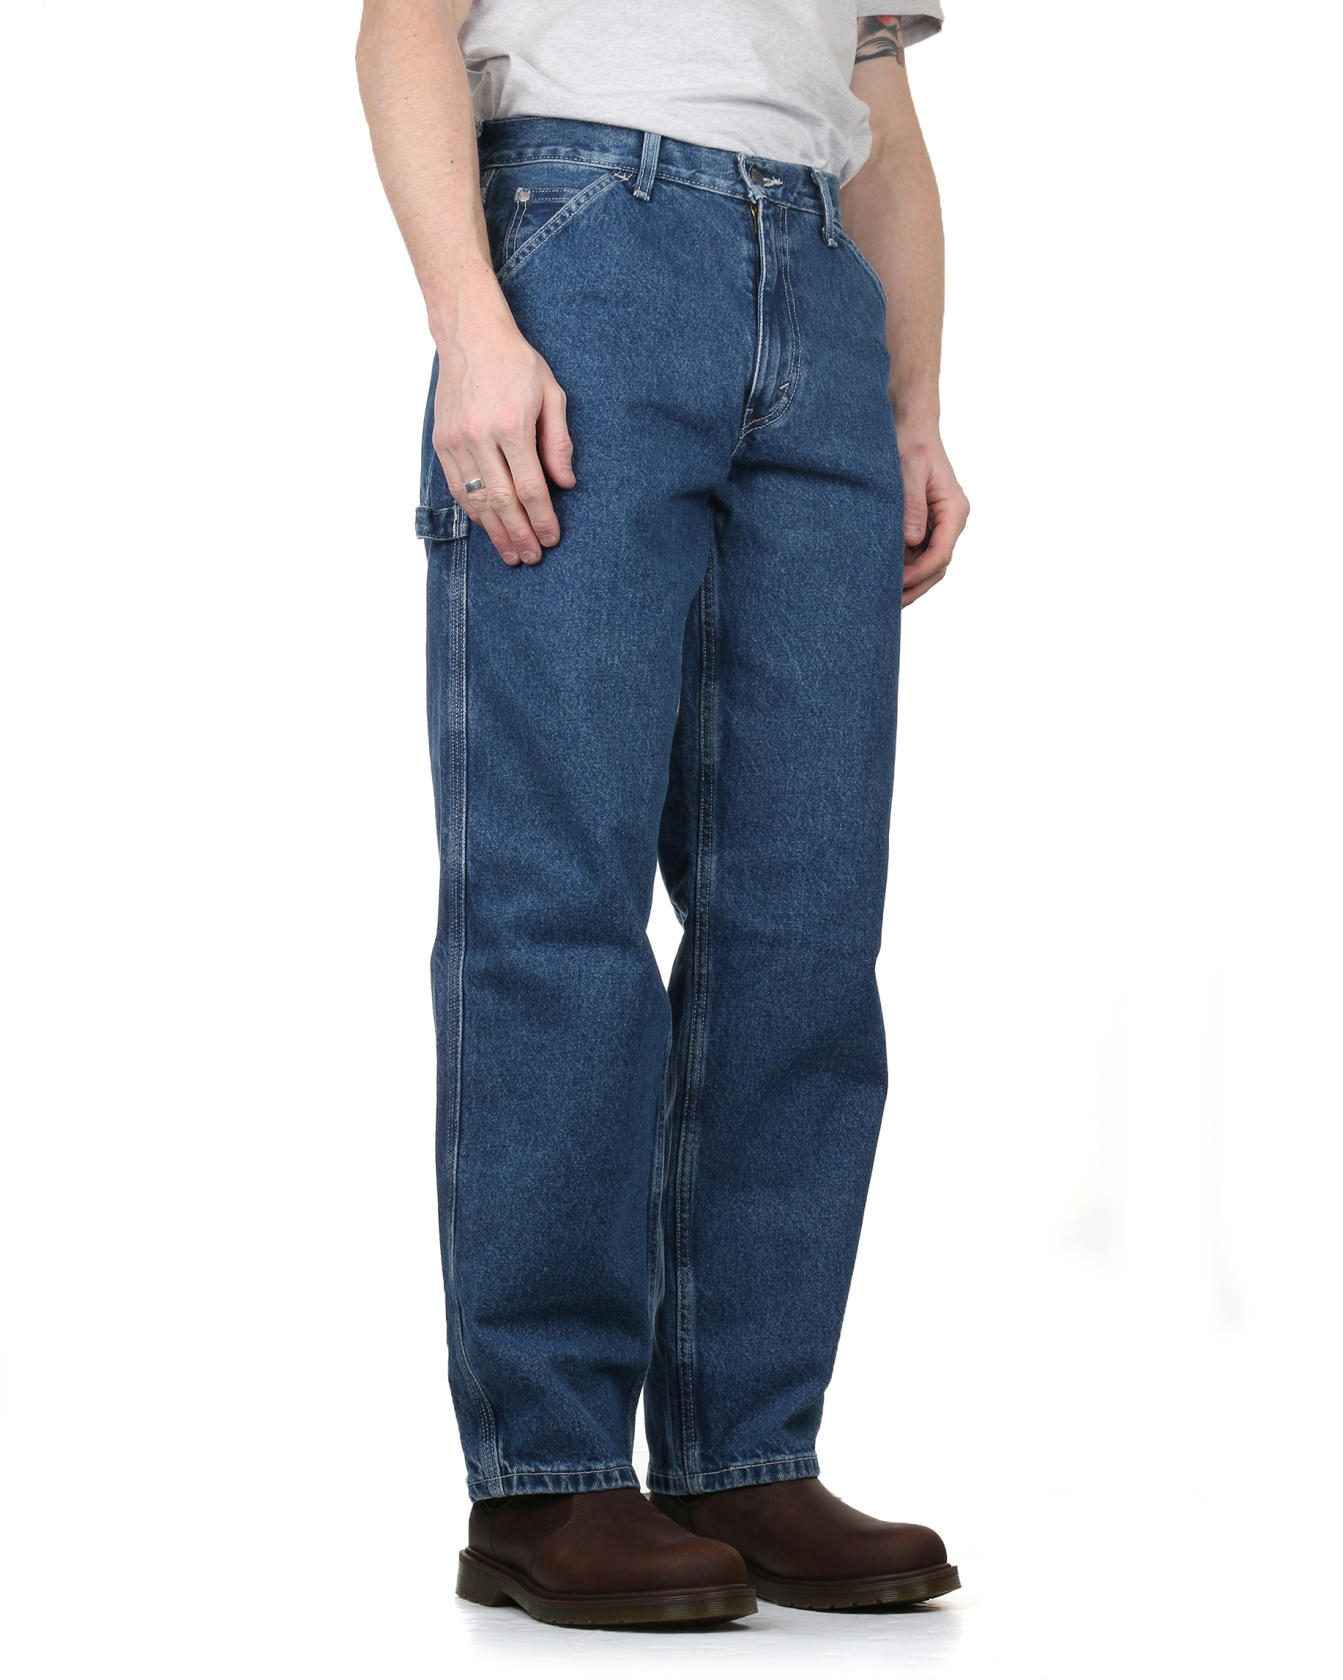 LEVIS SILVERTAB CARPENTER Jeans-Santa Rosa Carpenter EUR 112,39 - PicClick  FR